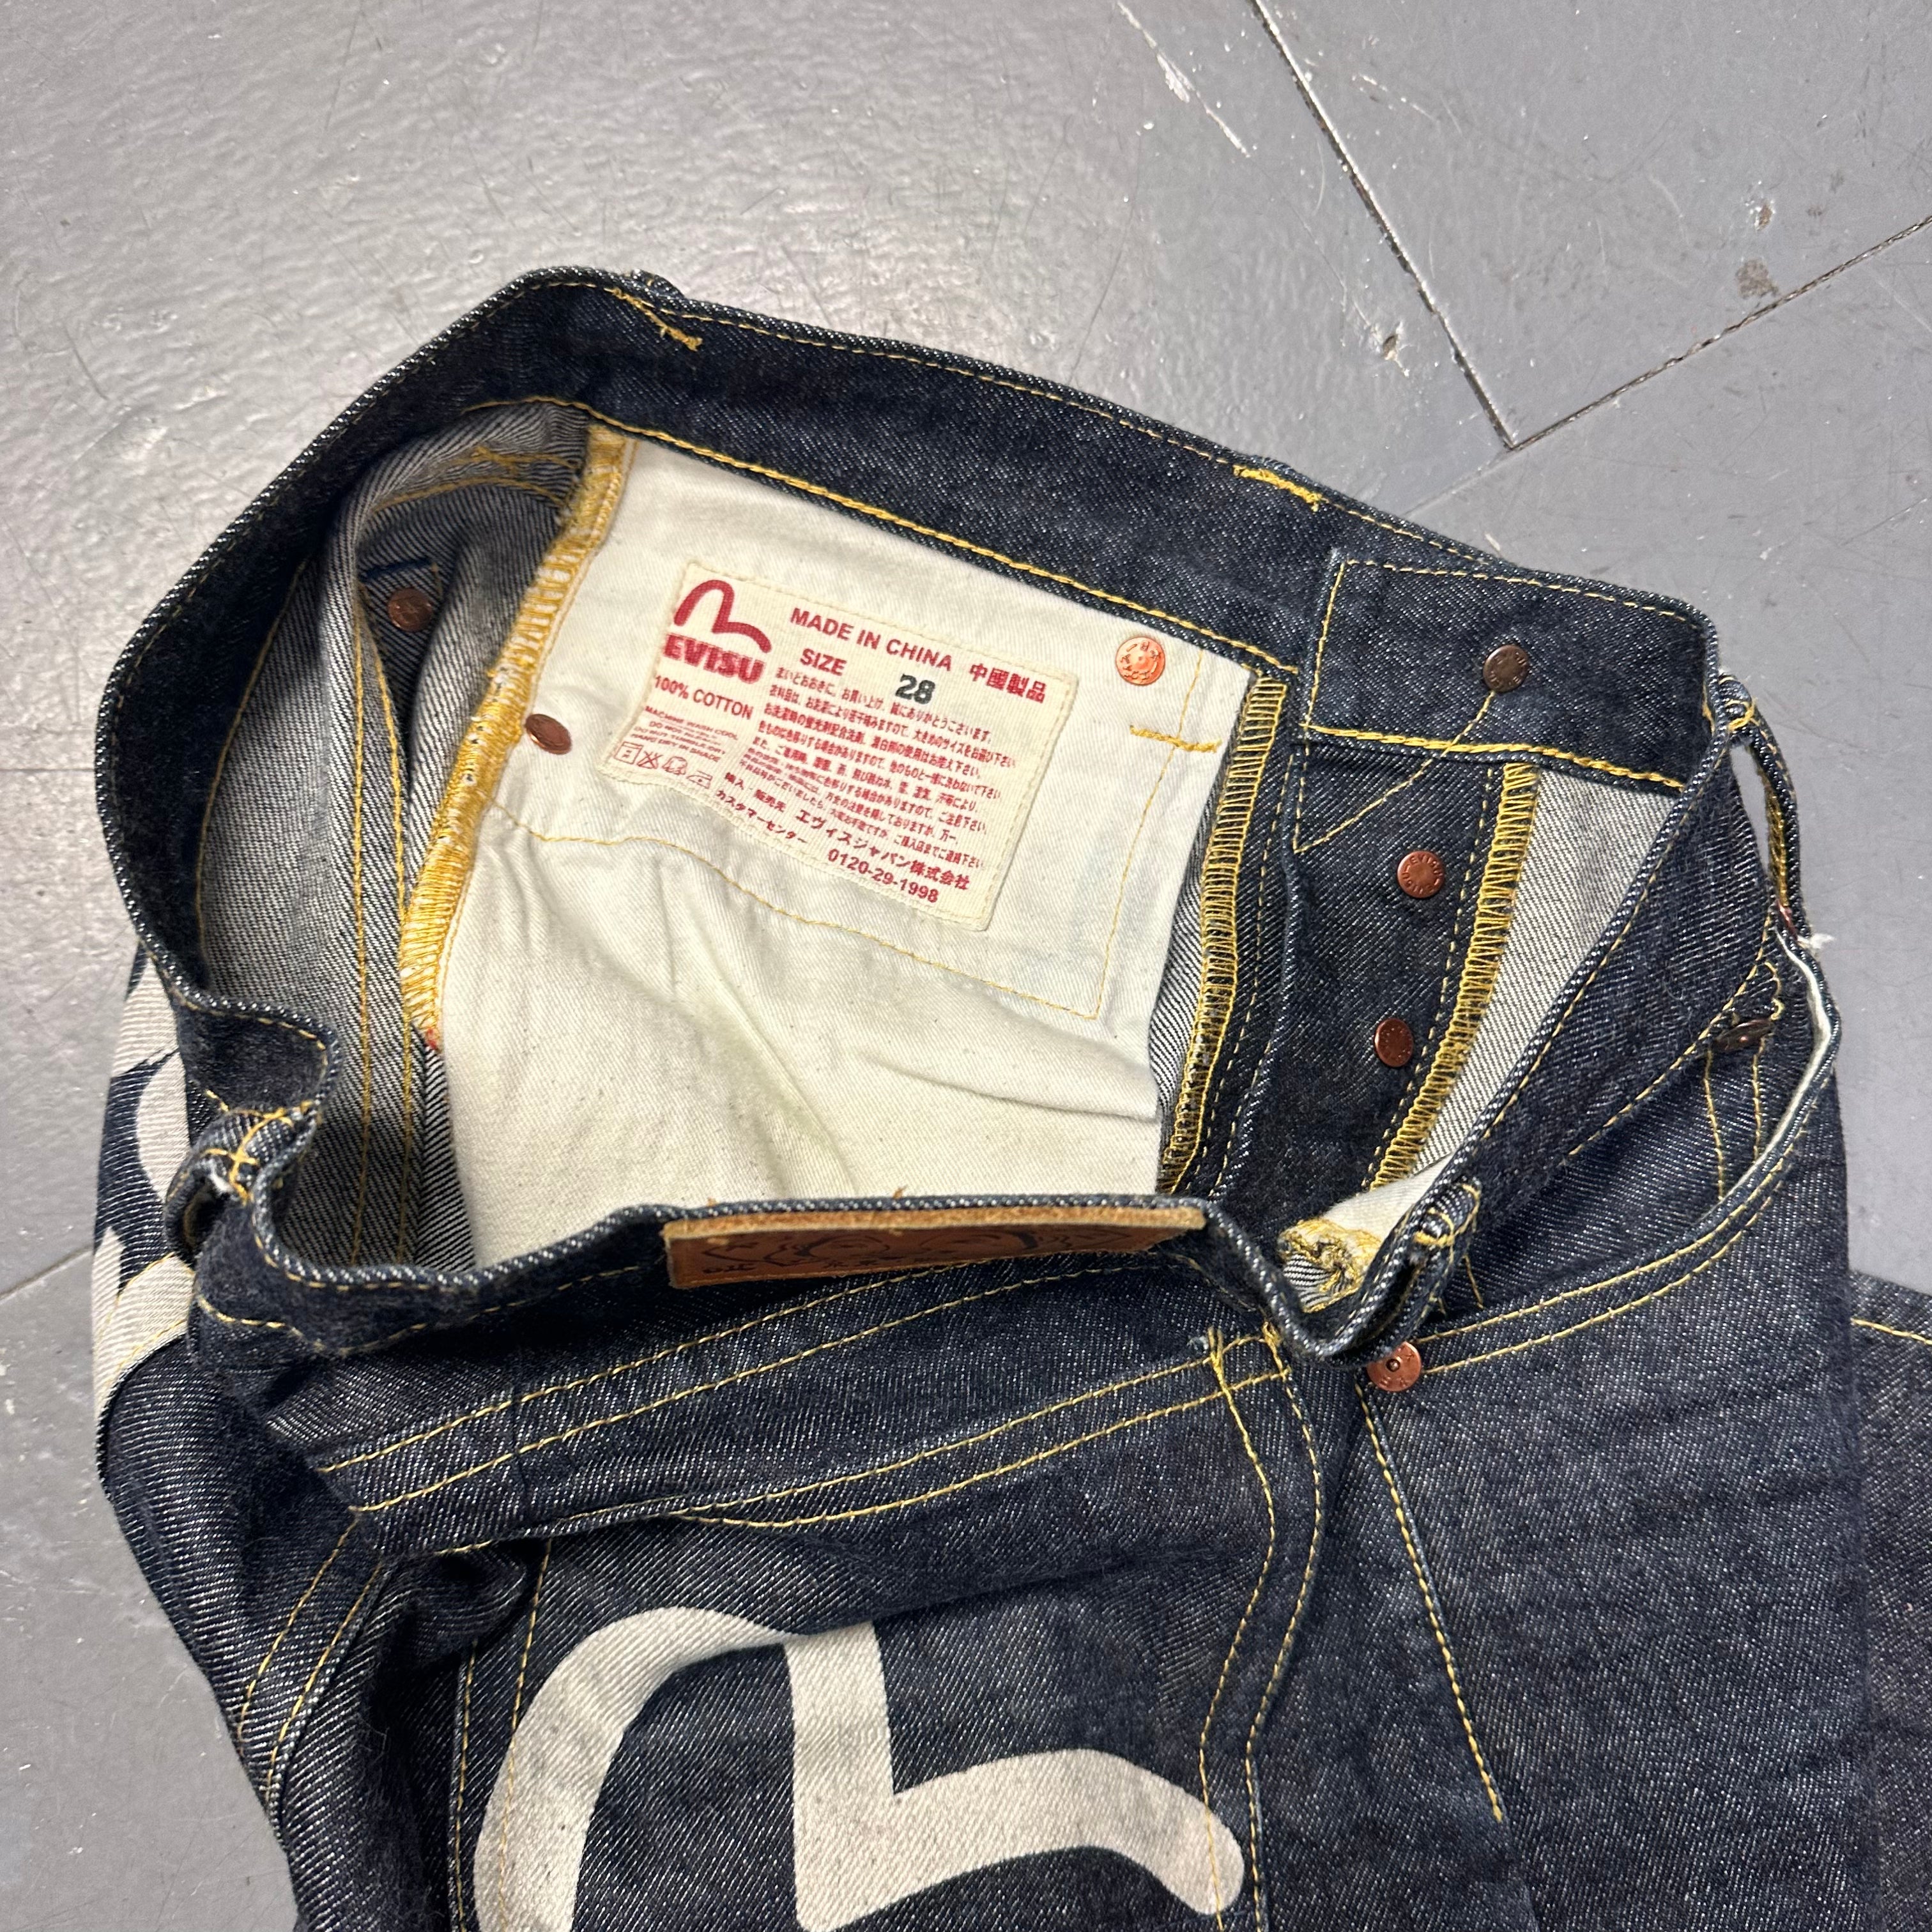 Evisu Selvedge Jeans With ‘Woman Osaka Print’ ( W28 )